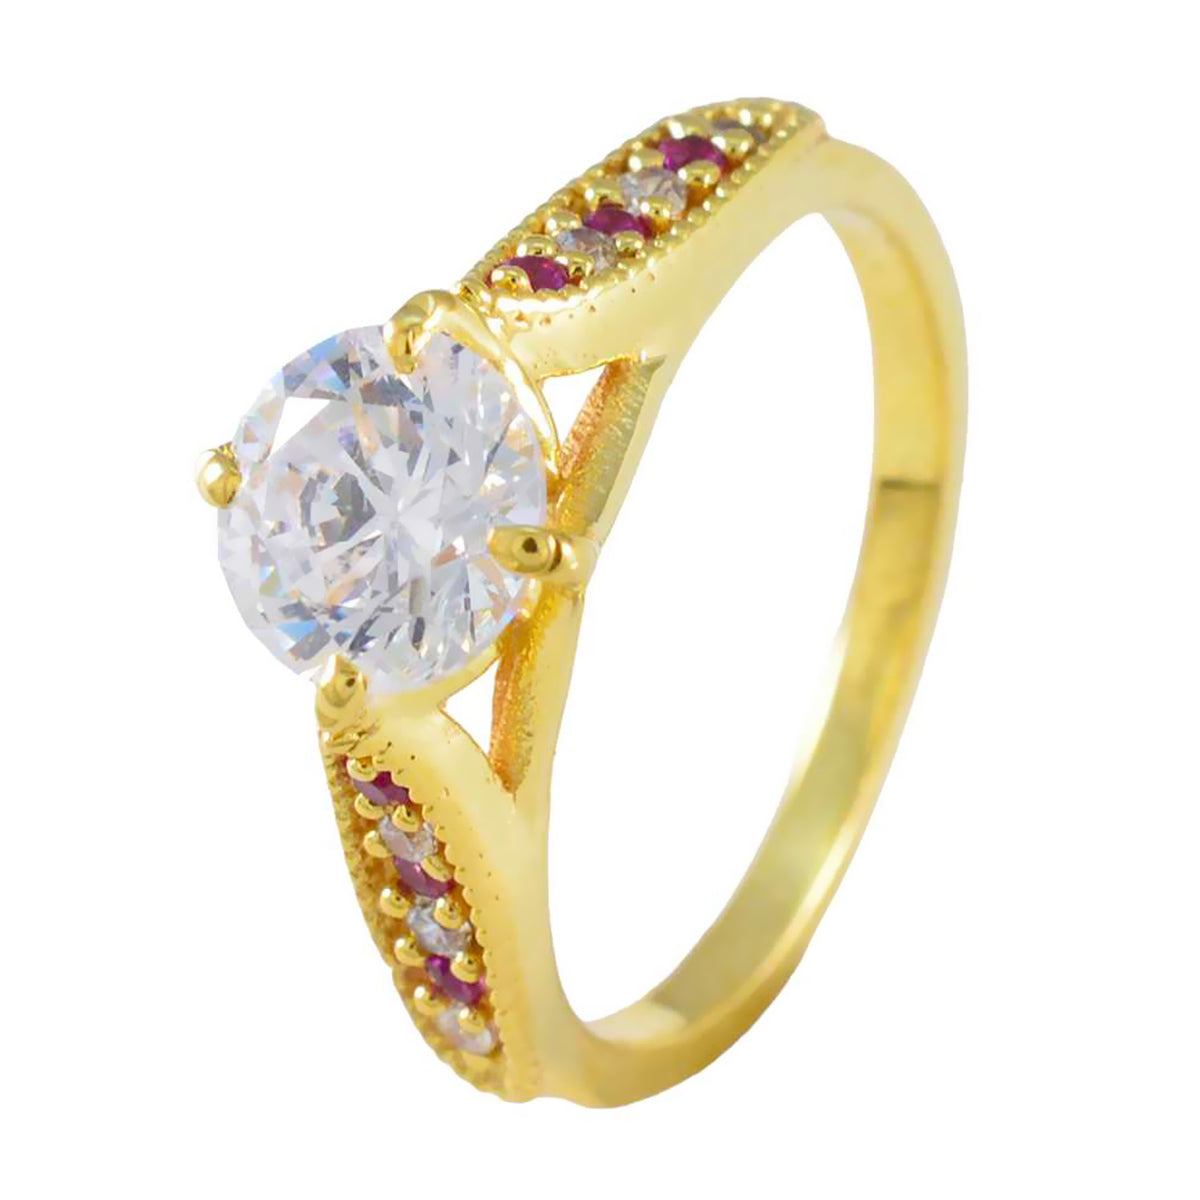 Encantador anillo de plata riyo con anillo de compromiso con forma redonda de piedra de rubí cz chapado en oro amarillo